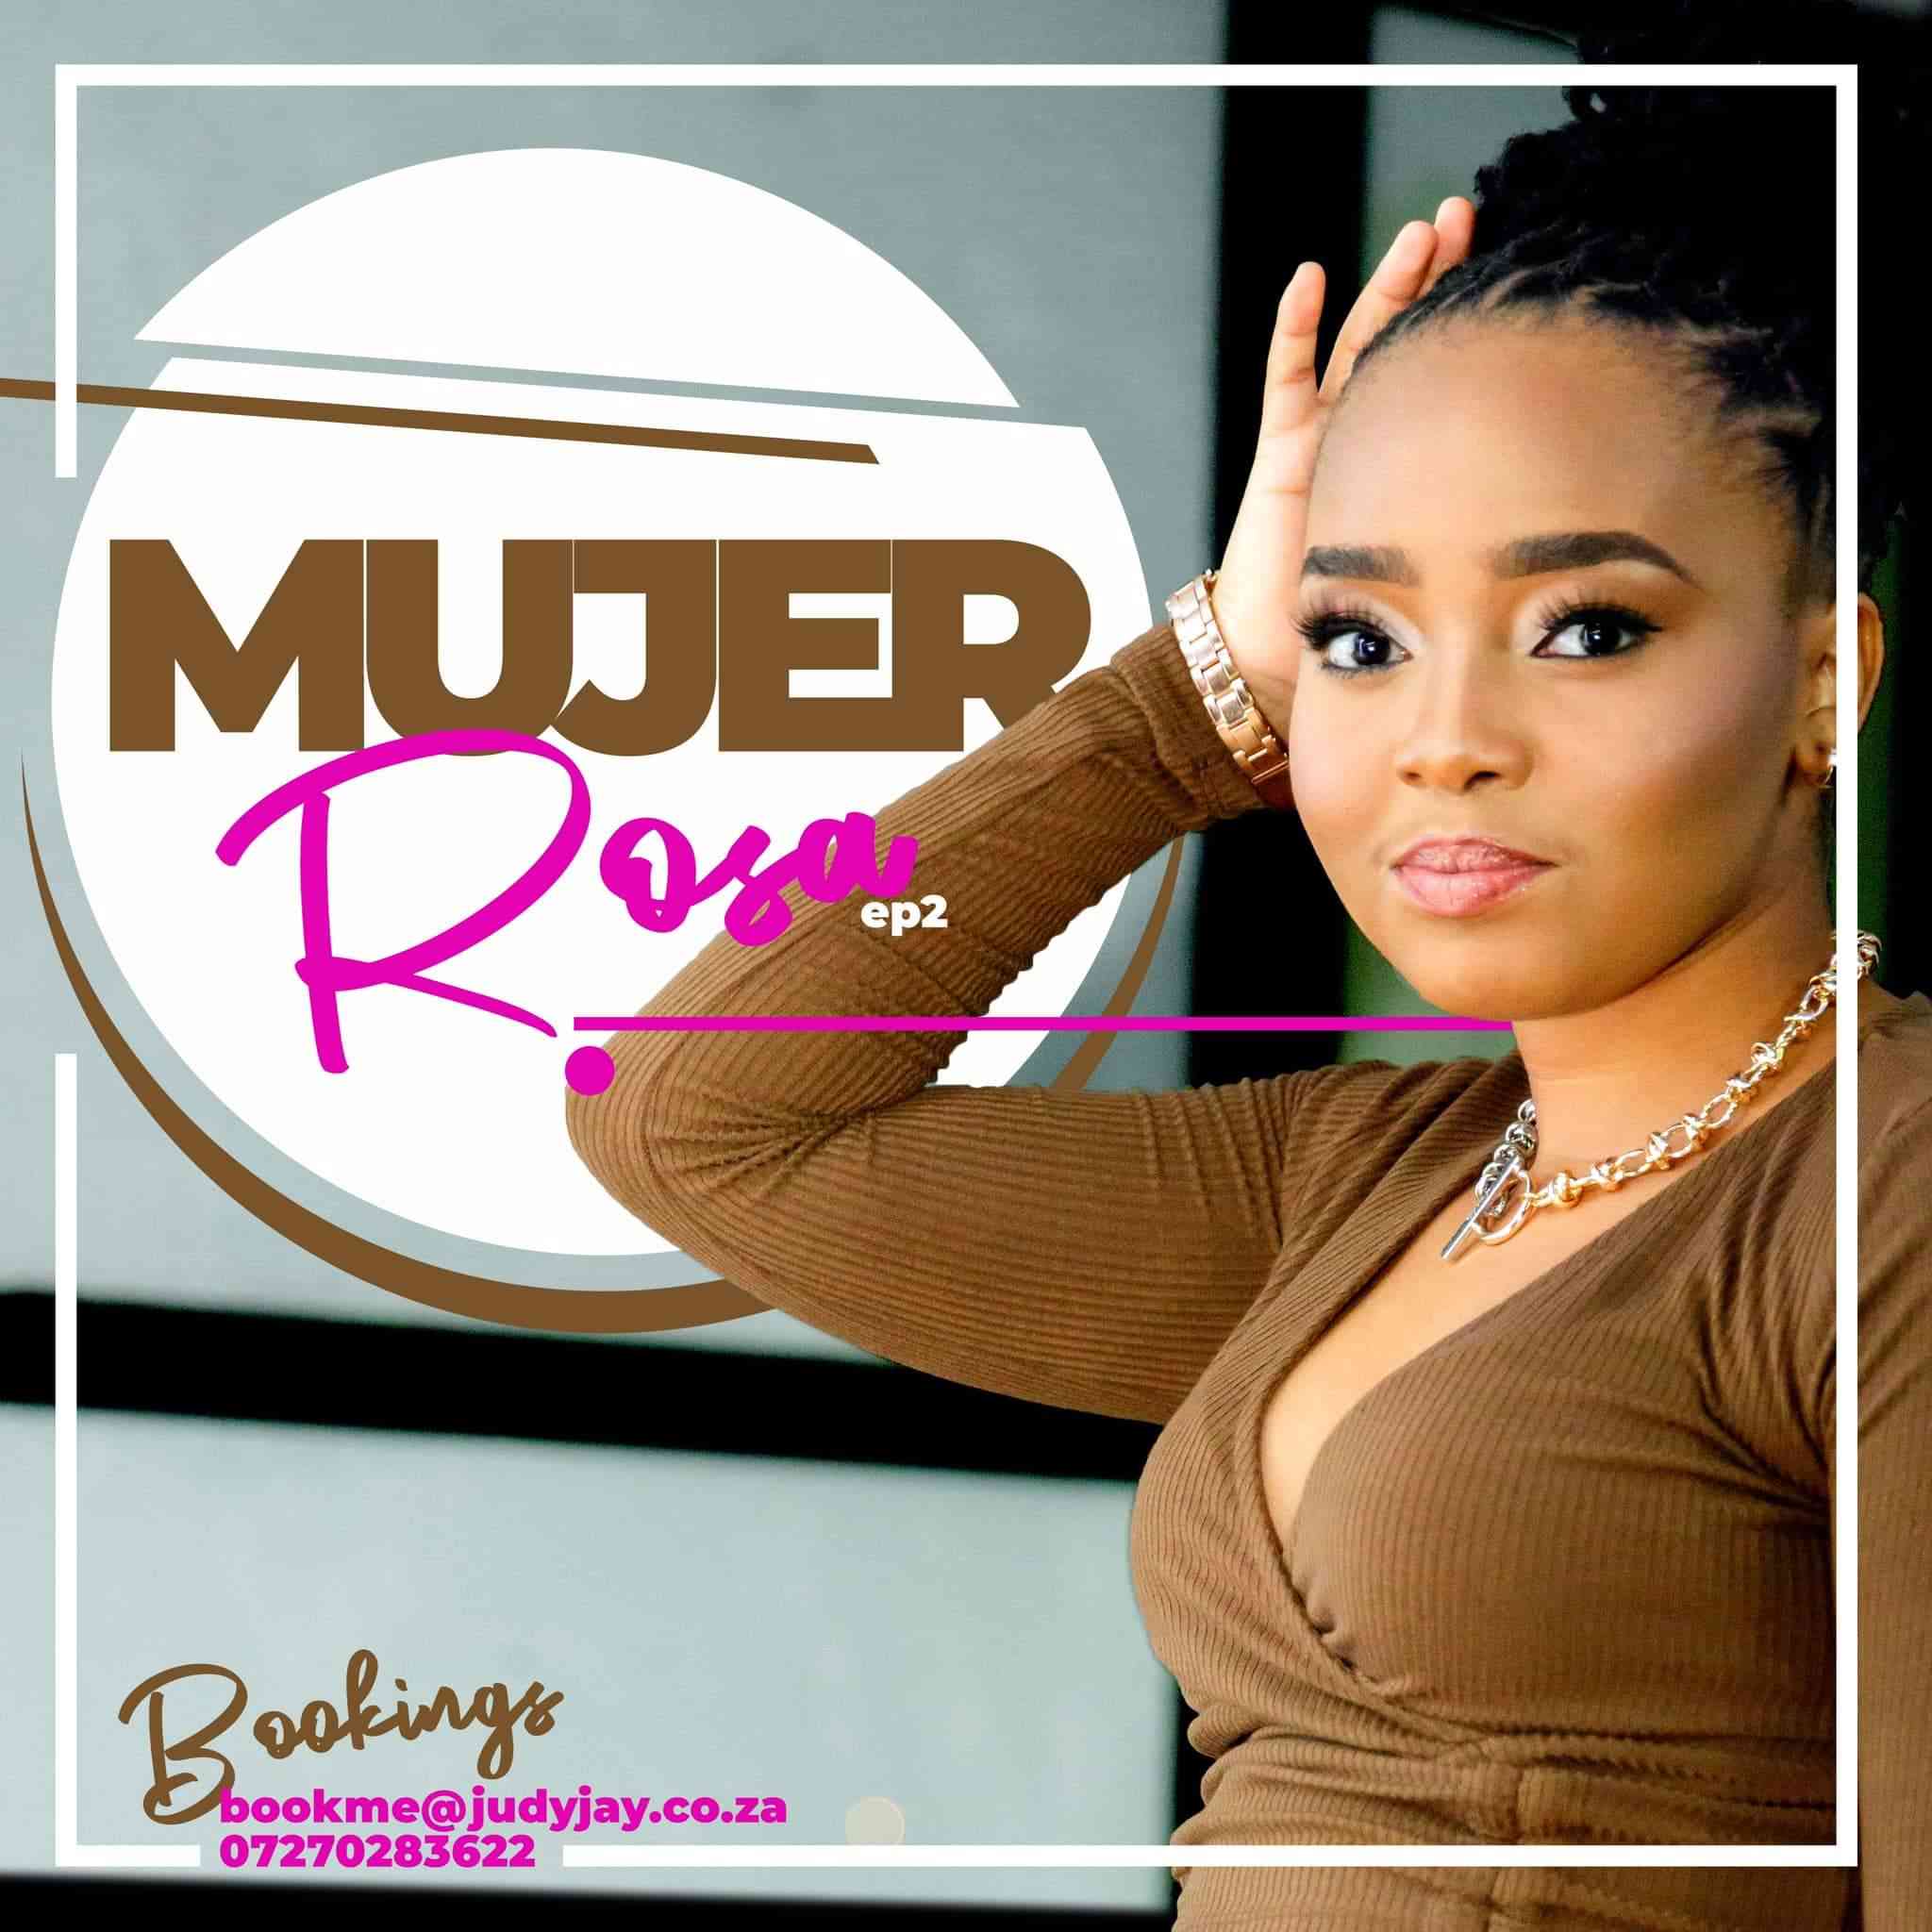 Judy Jay - Mujer Rosa Episode 2 Mix